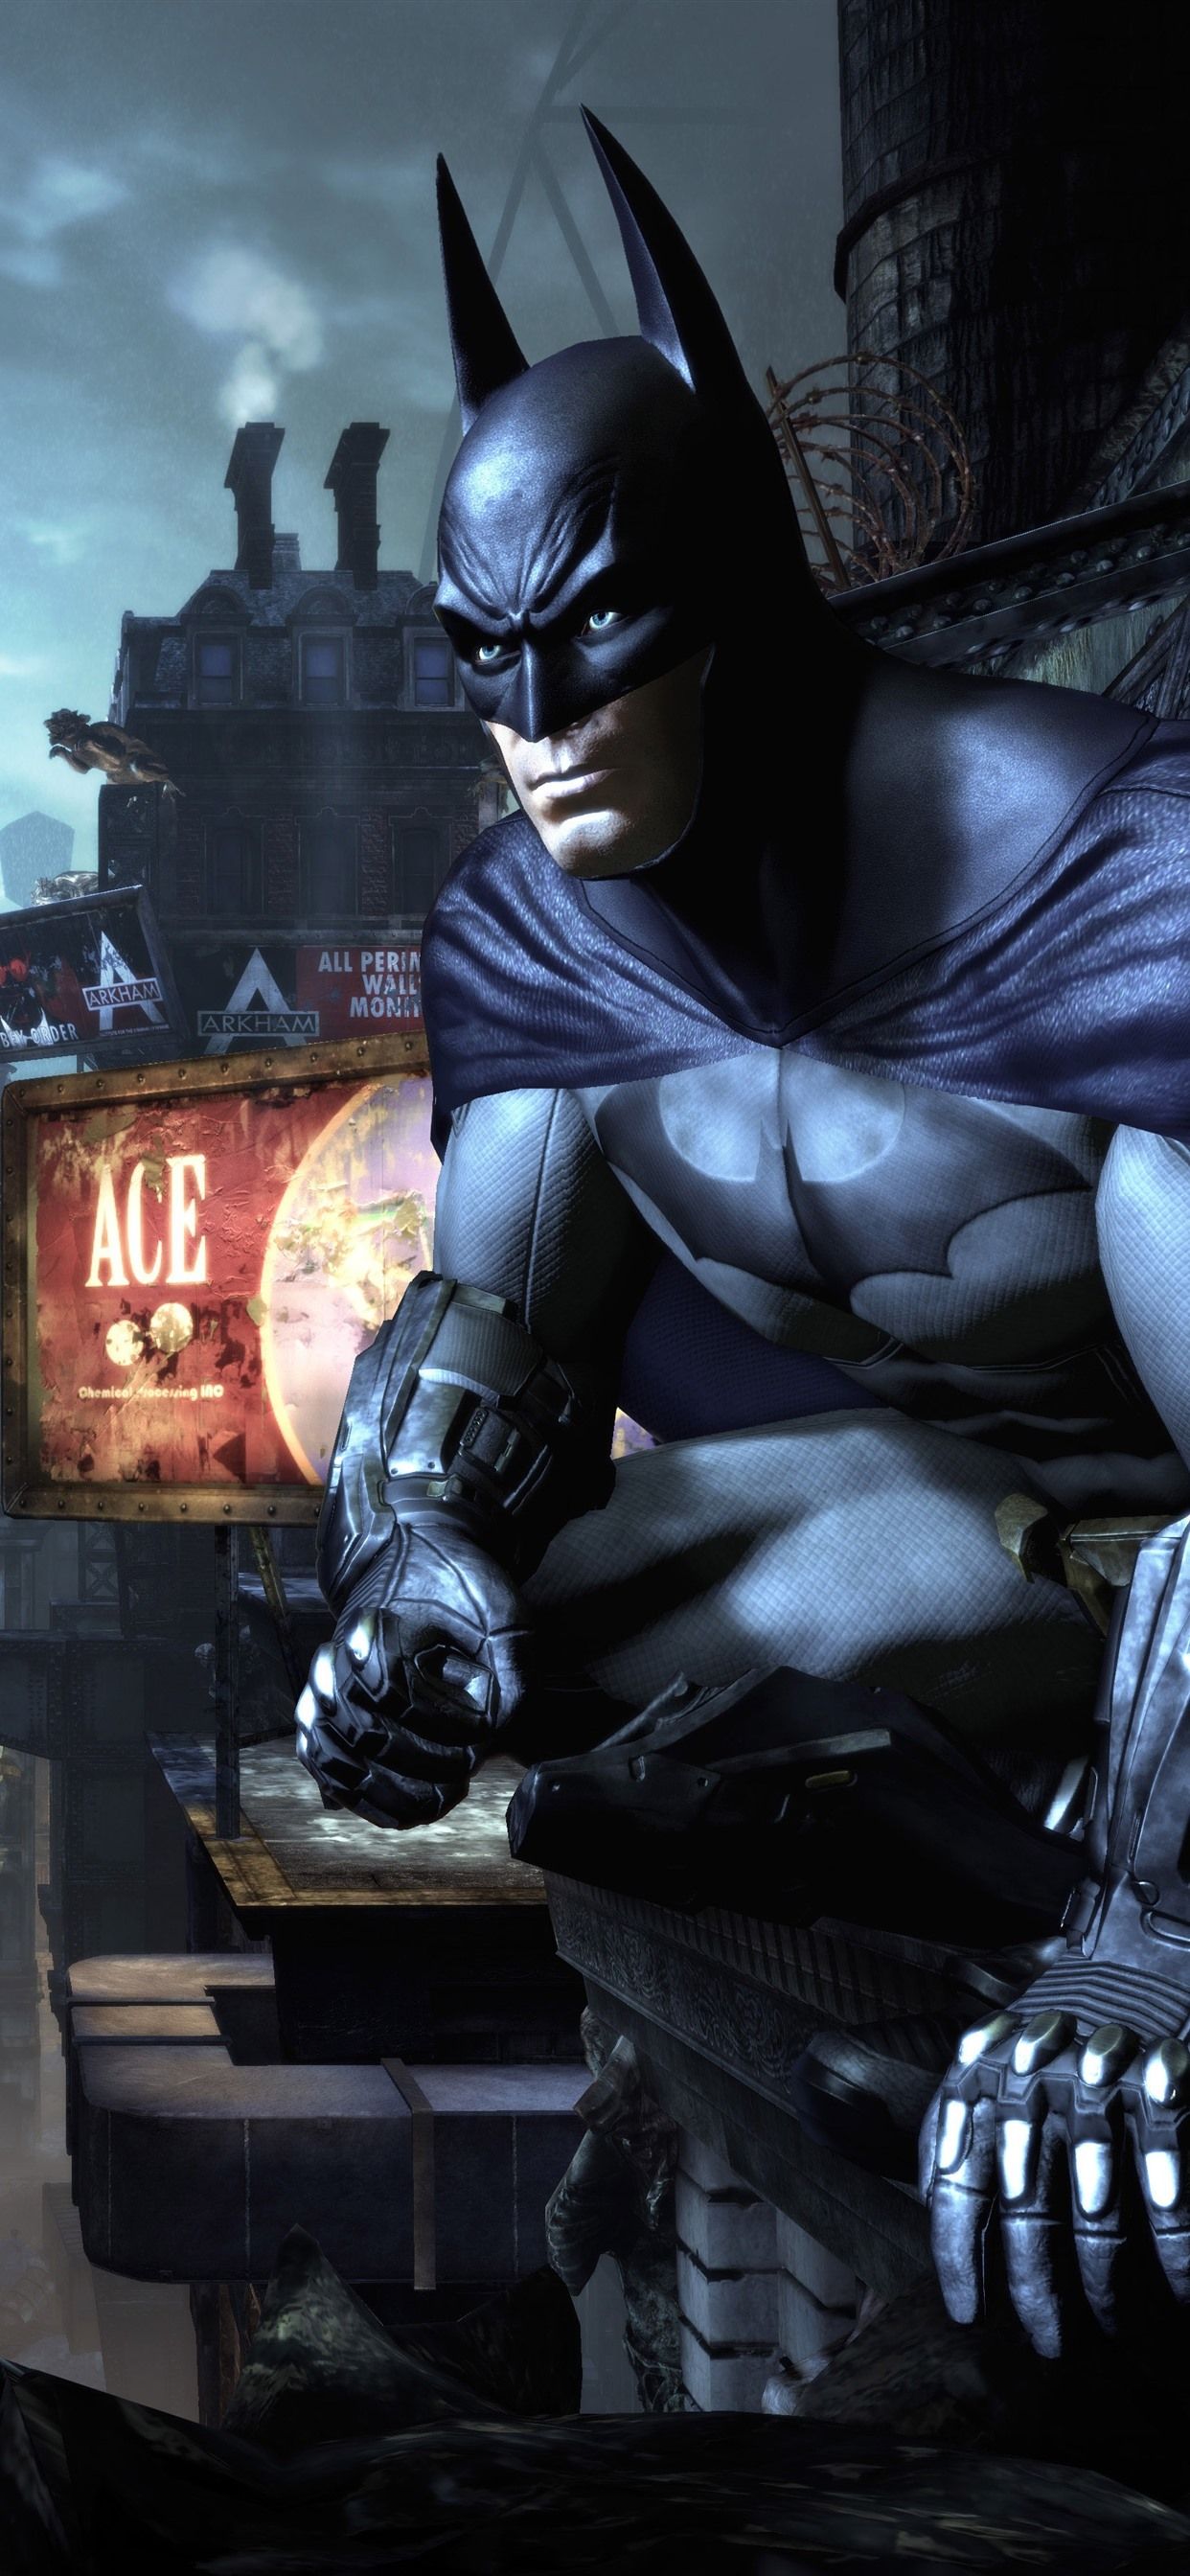 Batman, city, night, PC game 1242x2688 iPhone 11 Pro/XS Max